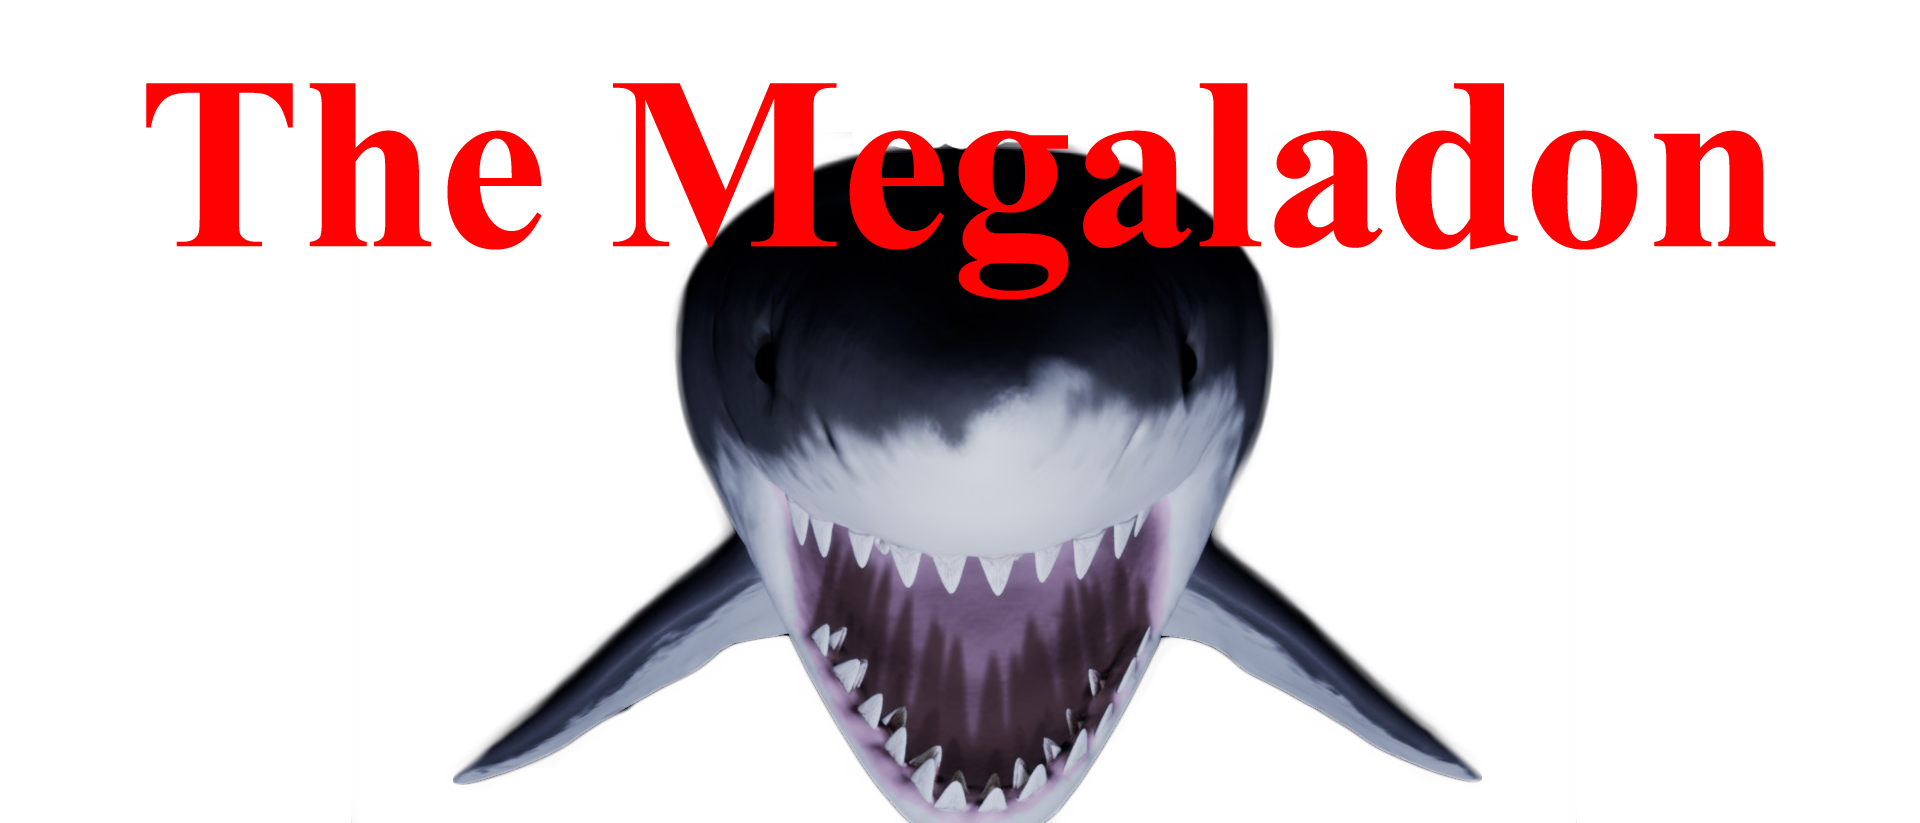 The Megaladon